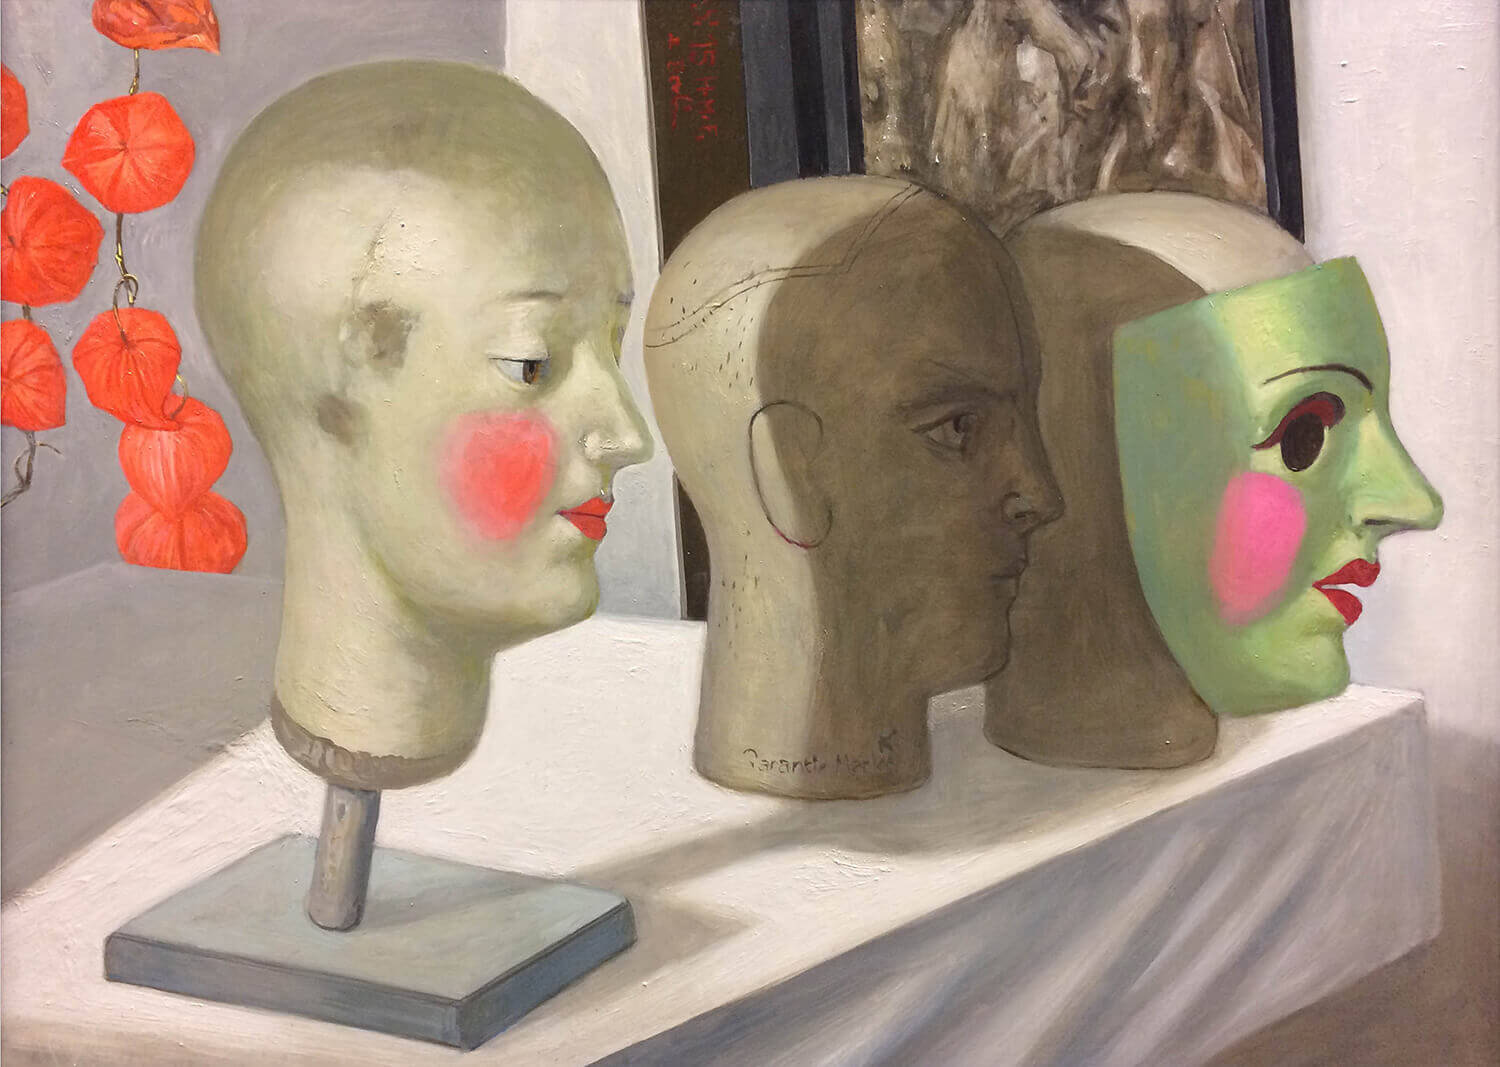 Volker Stelzmann, Heads, Masks, Japanese Lanterns, 2015, mixed media on MDF, 60 x 80 cm

